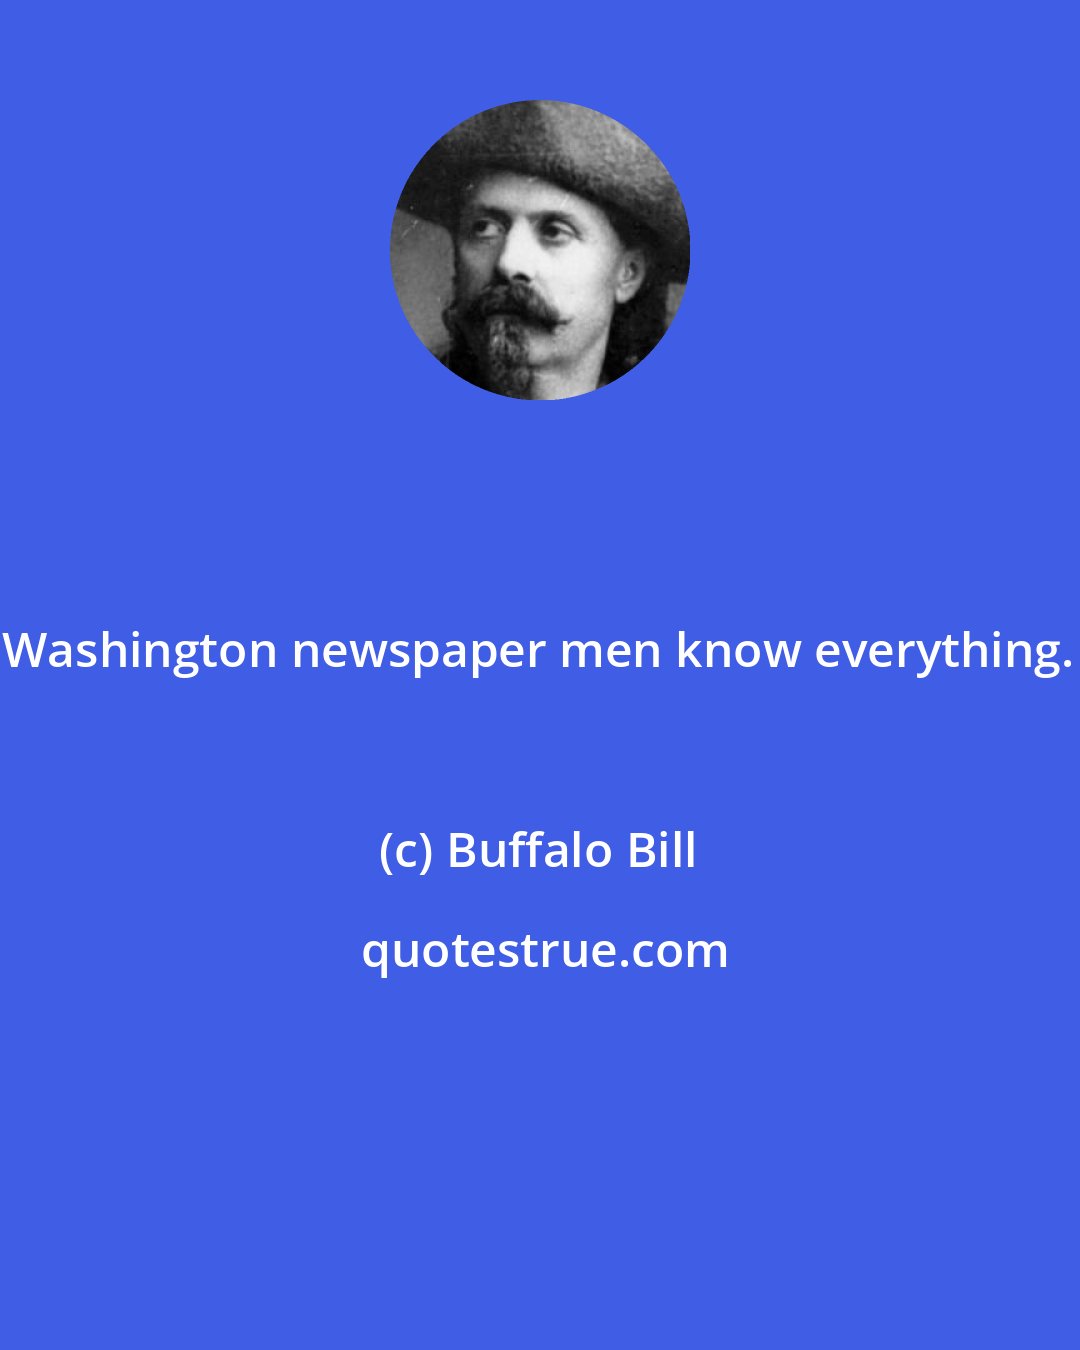 Buffalo Bill: Washington newspaper men know everything.